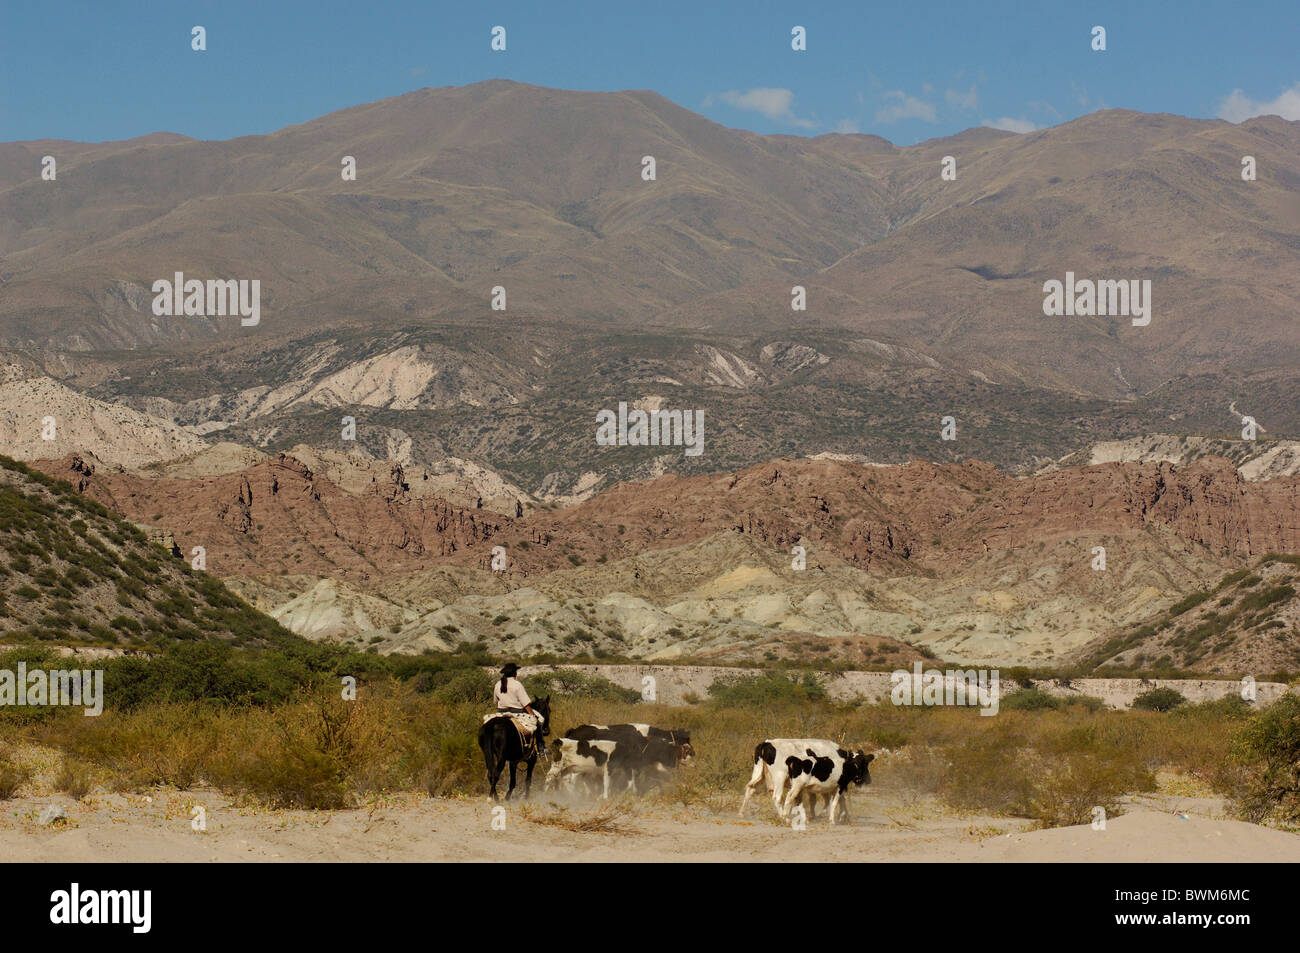 Argentina South America Gaucho San Jose Catamarca South America horse rider cows cattle landscape desert m Stock Photo